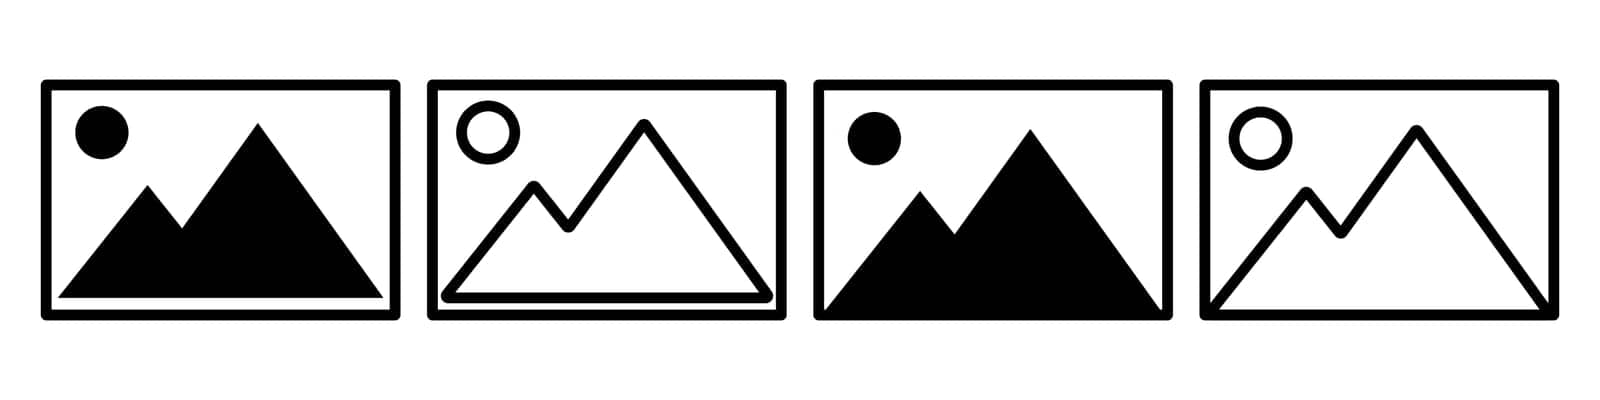 Picture frame icon symbol set